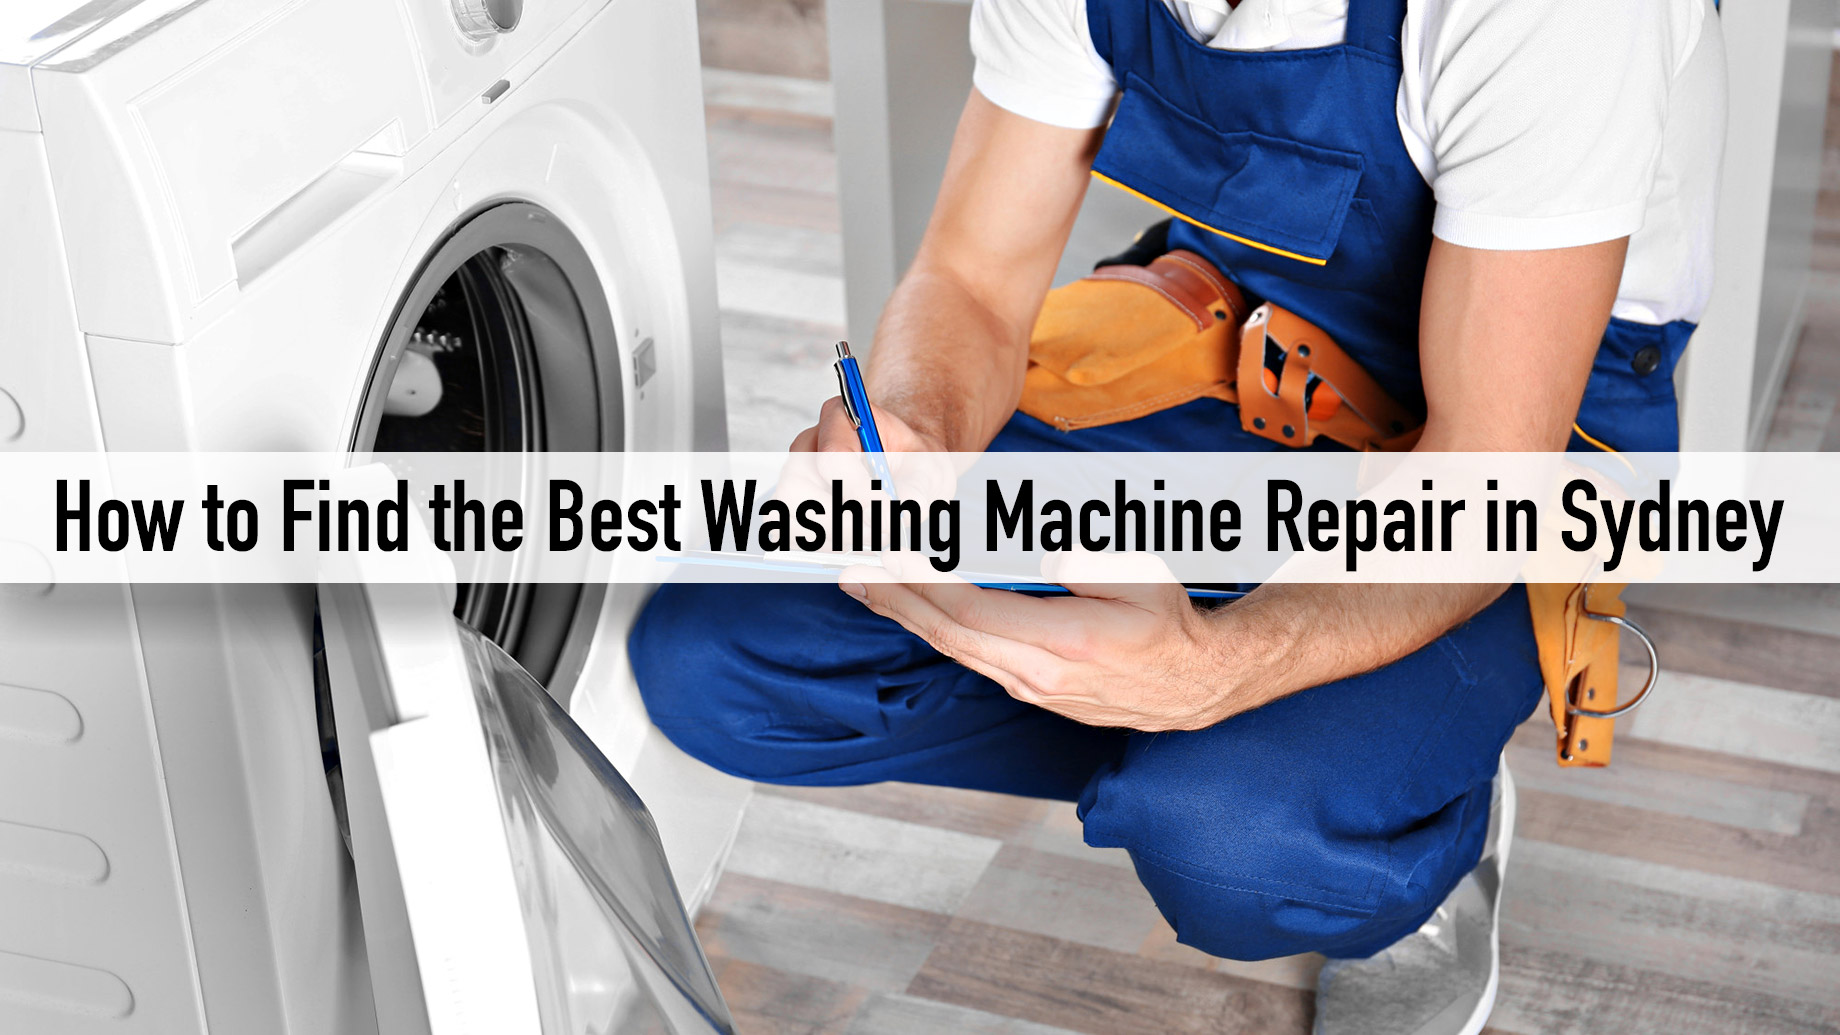 How to Find the Best Washing Machine Repair in Sydney